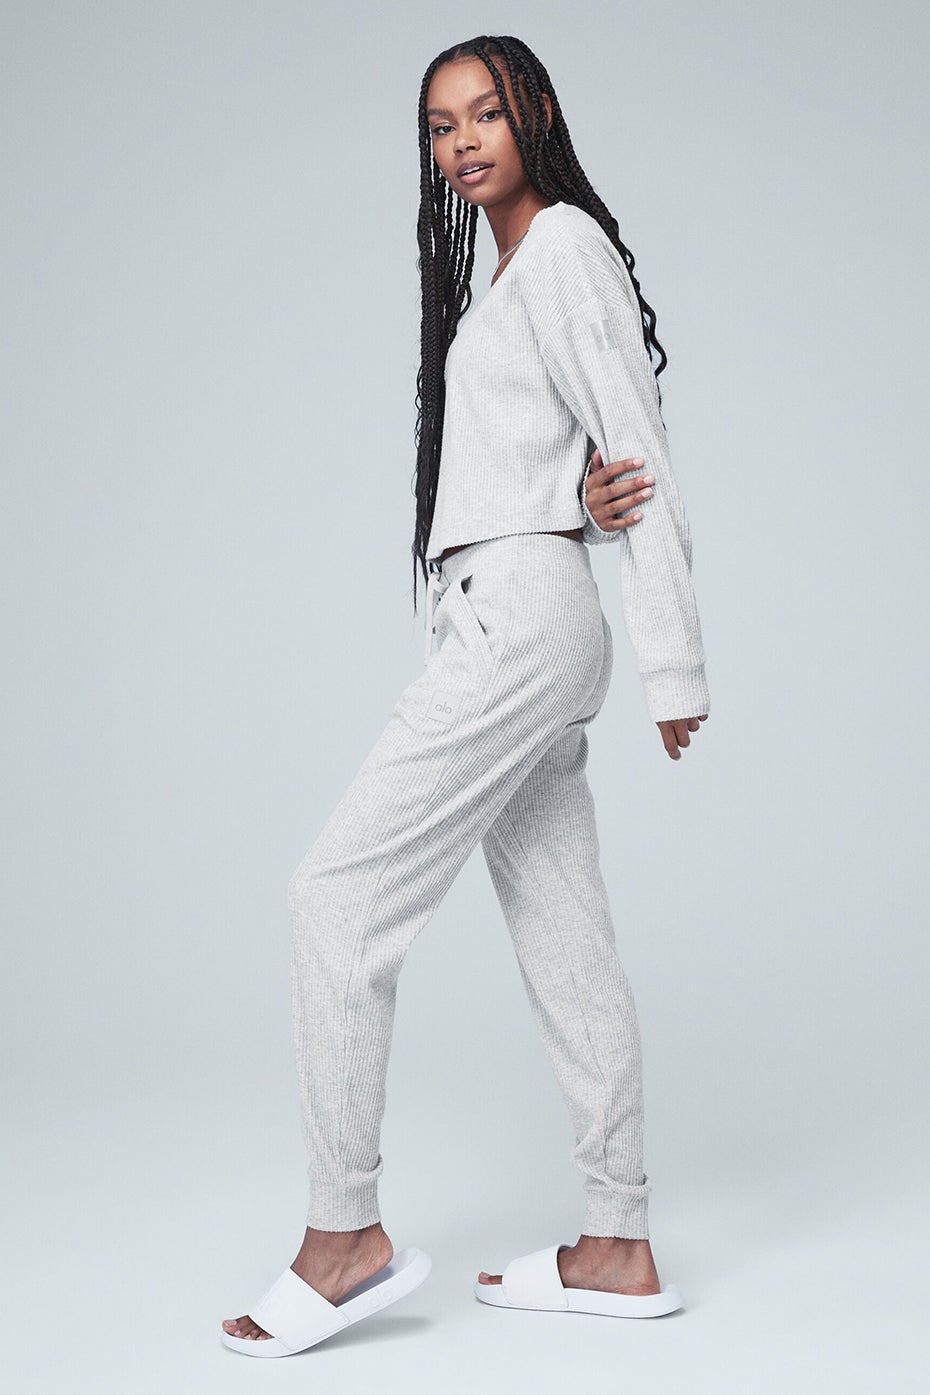 Muse Sweatpant - Gravel Heather  Pants for women, Fashion joggers